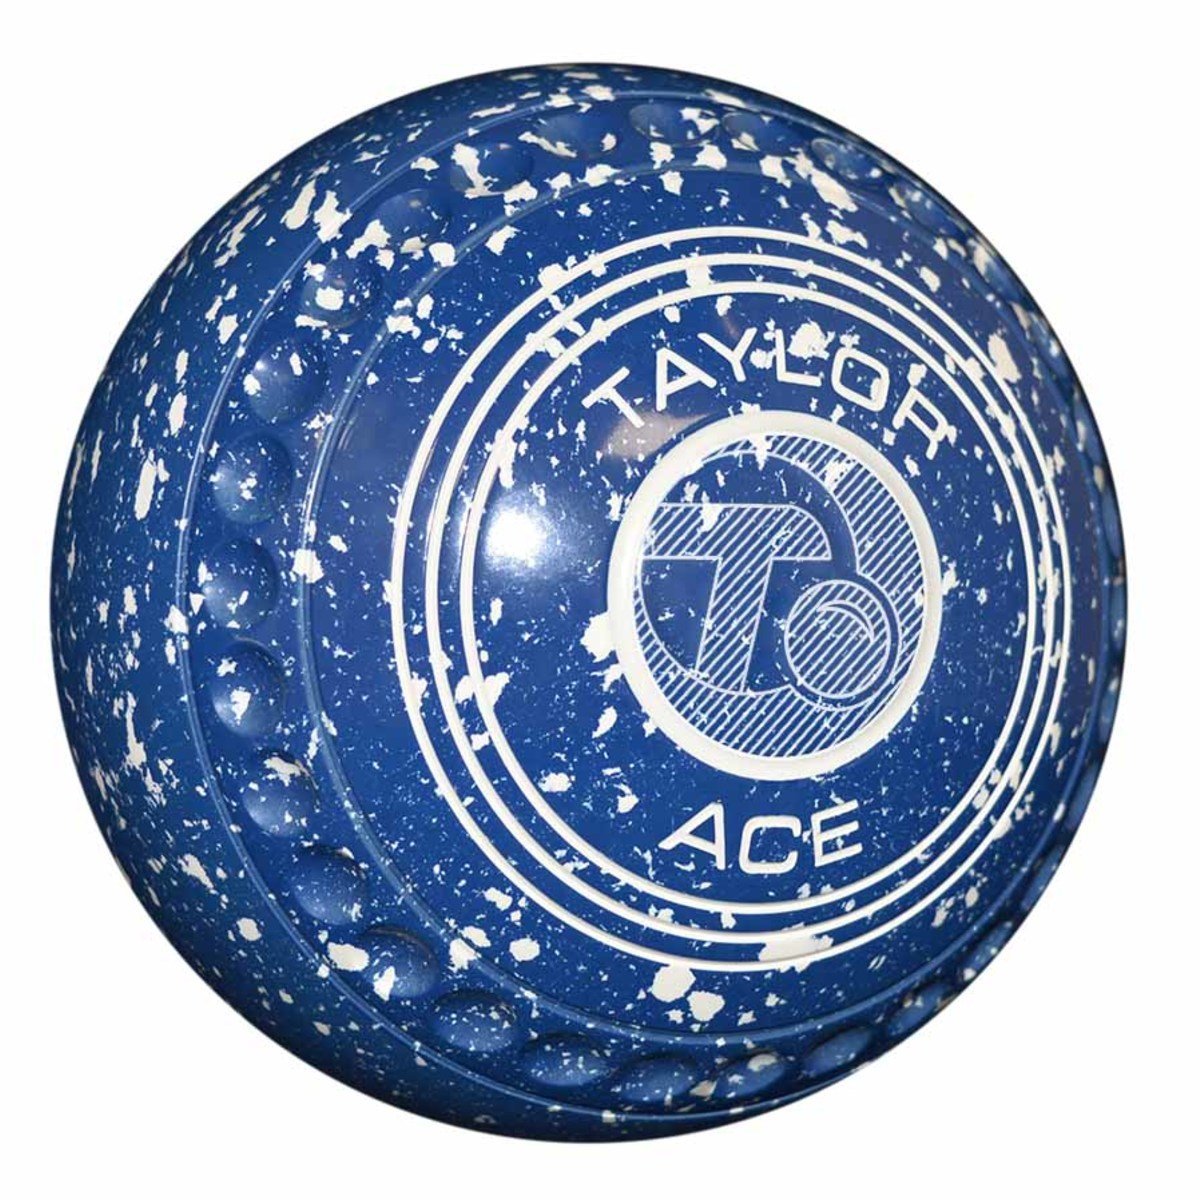 Taylor Ace Coloured Bowls